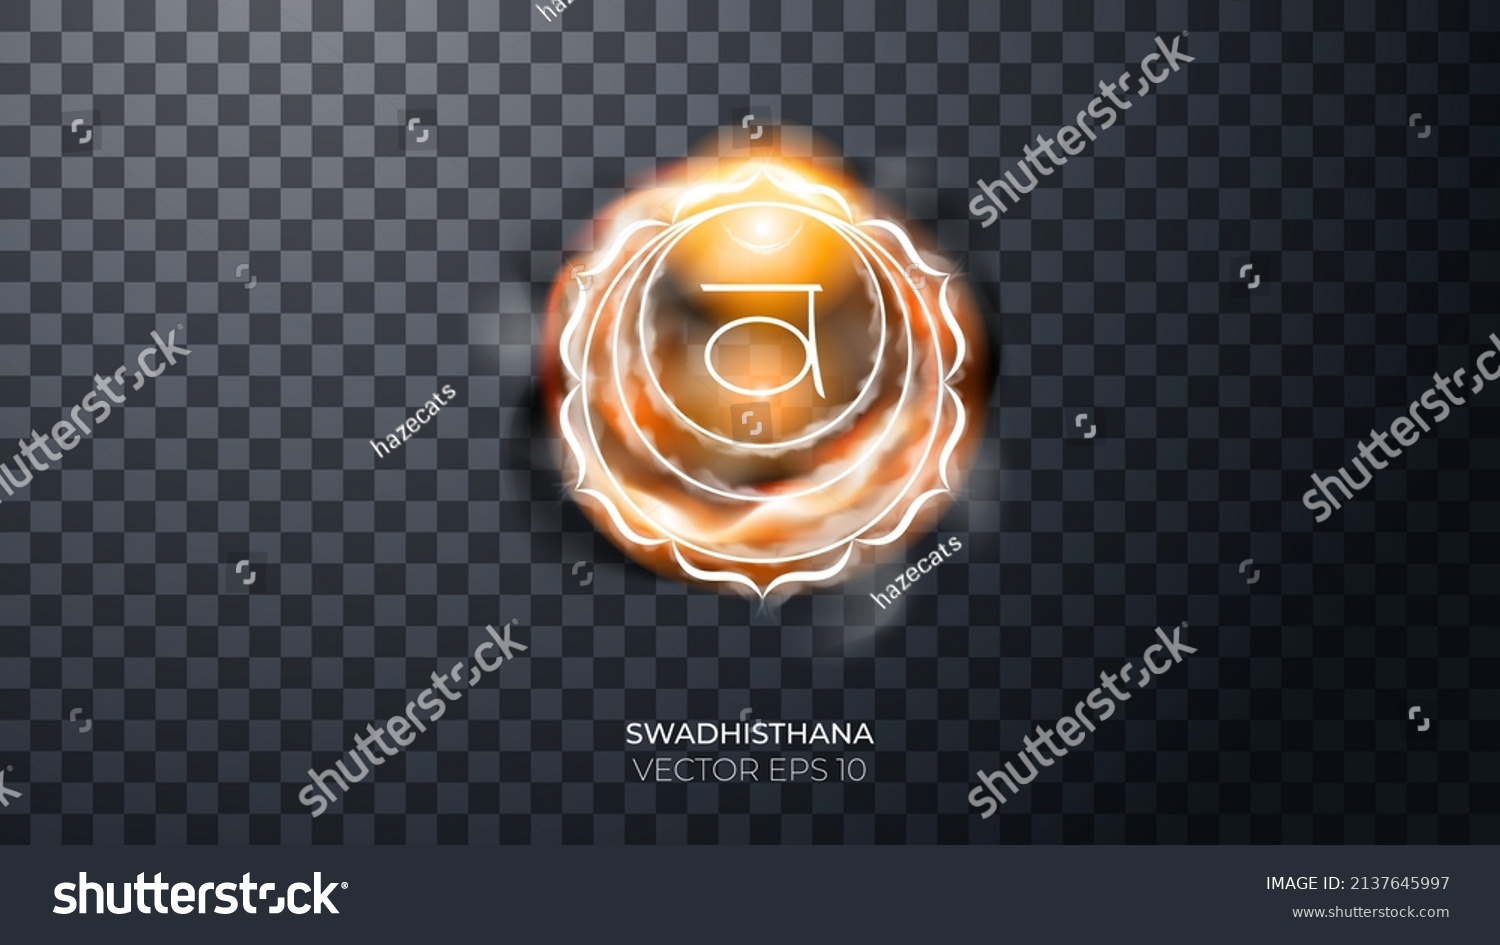 SVG of Second, sacral chakra - Swadhisthana. Illustration of one of the seven chakras. Symbol of Hinduism, Buddhism. Ethereal strange fire sign. Decor elements for magic doctor, shaman, medium. svg